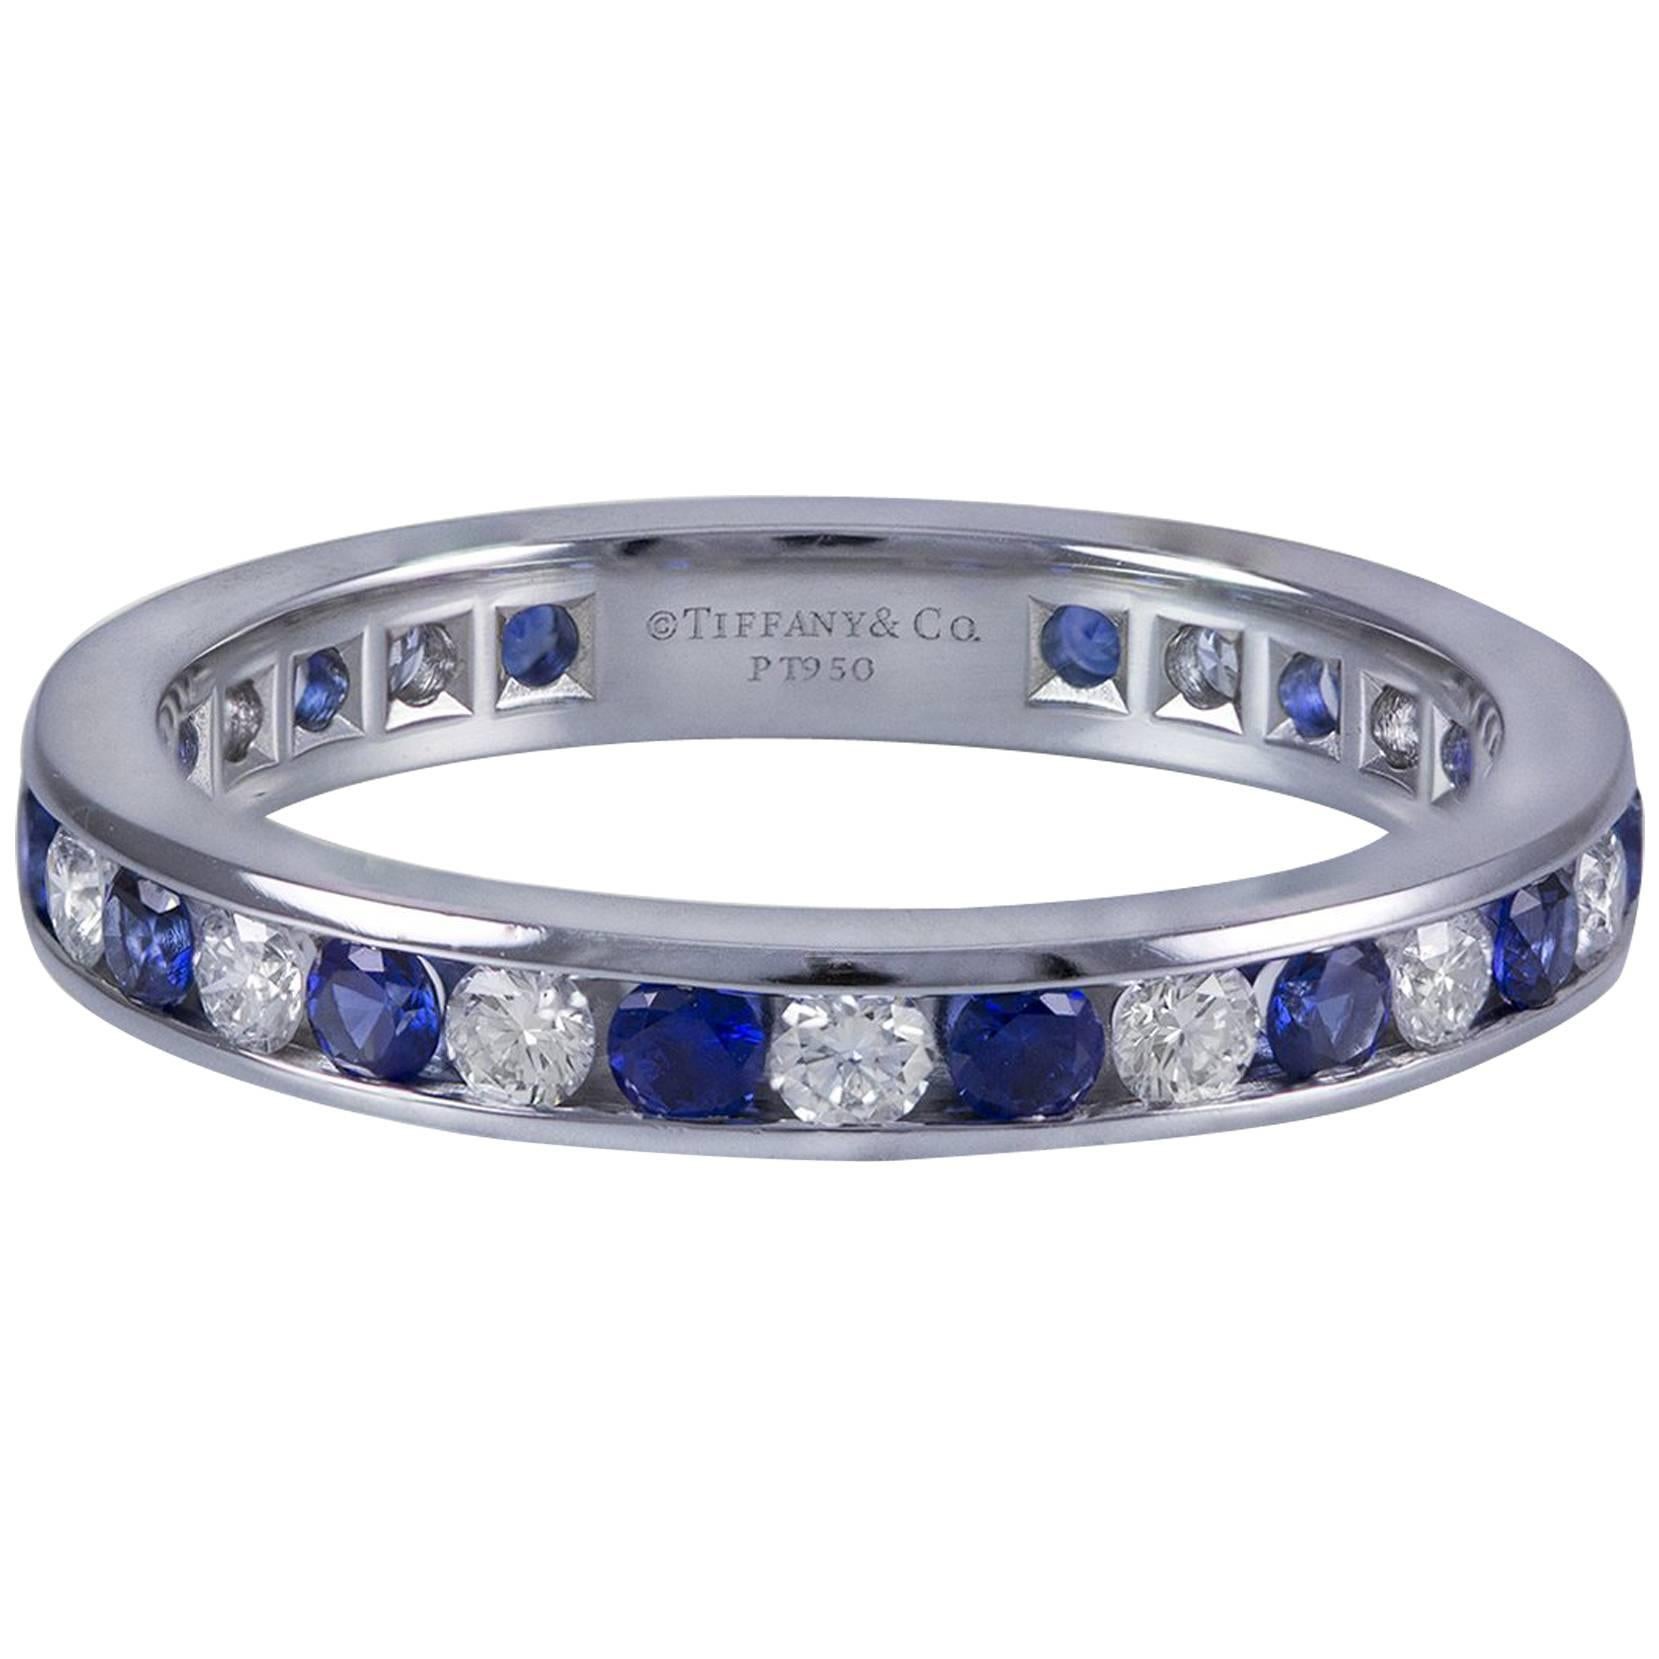 Tiffany & Co. Sapphire Diamond Platinum Wedding Band Ring